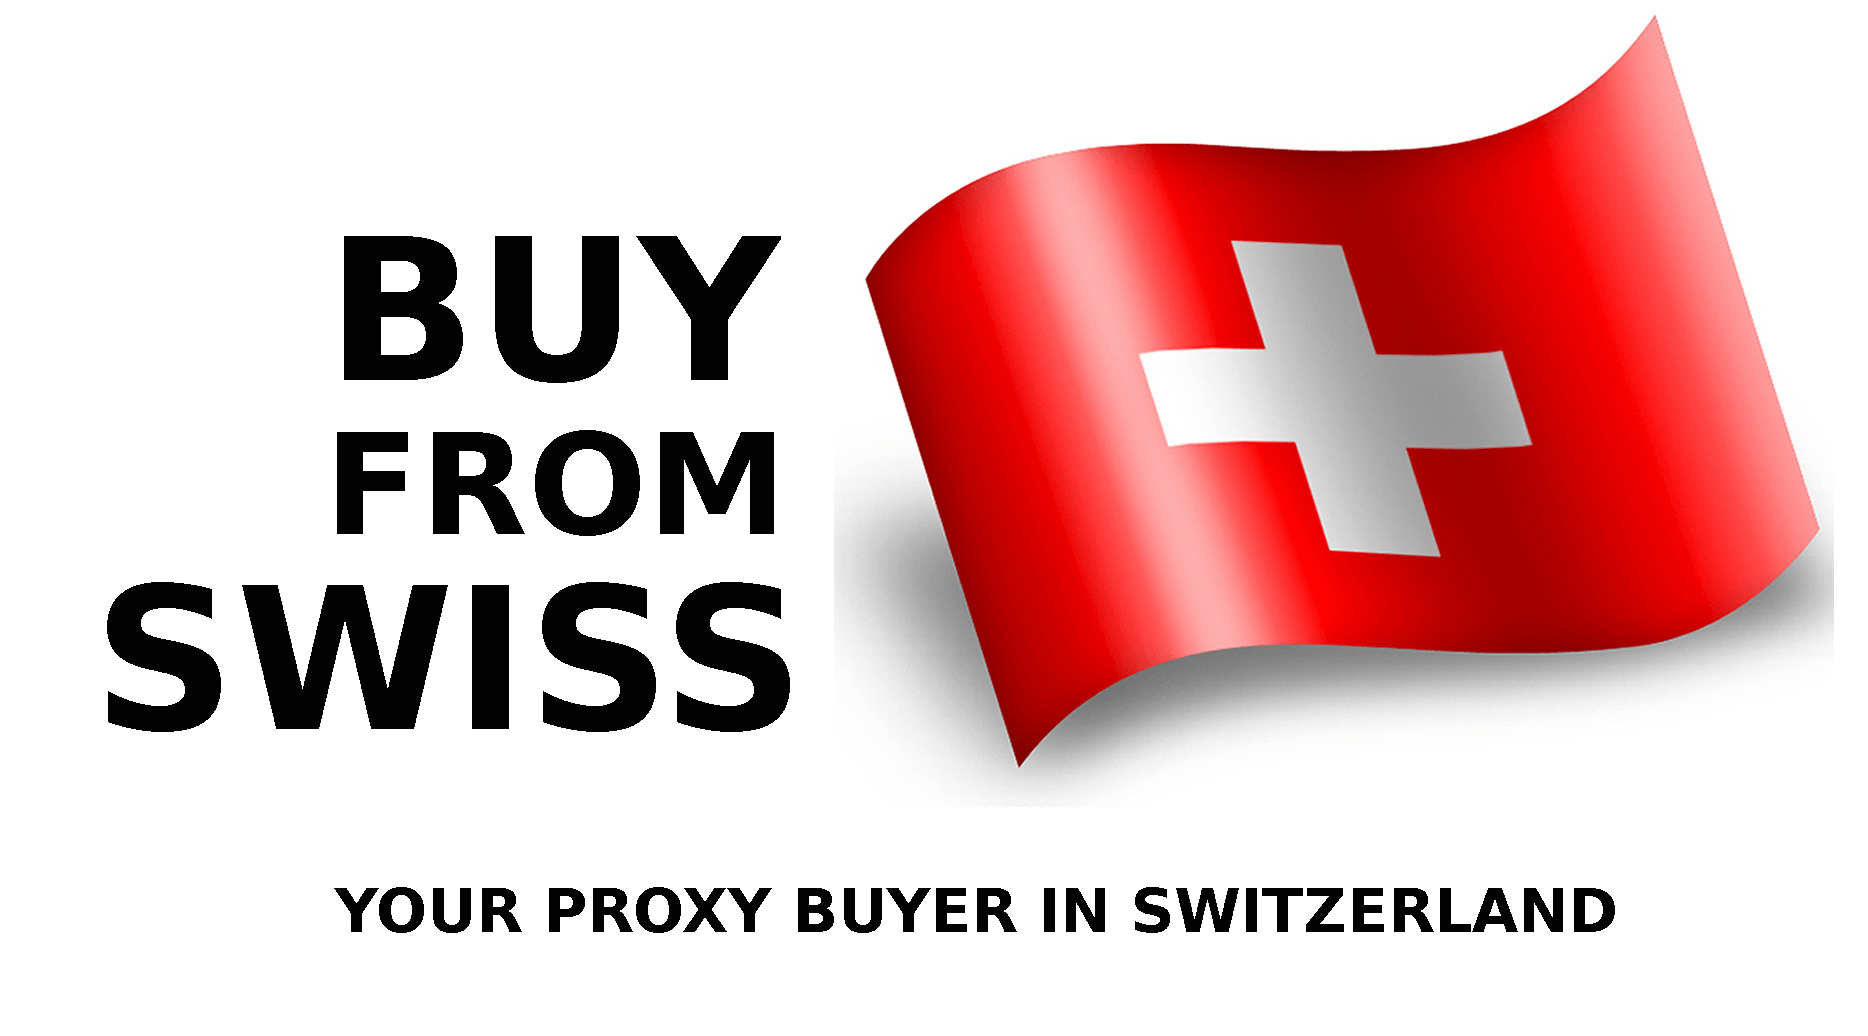 Your proxy buyer in Switzerland